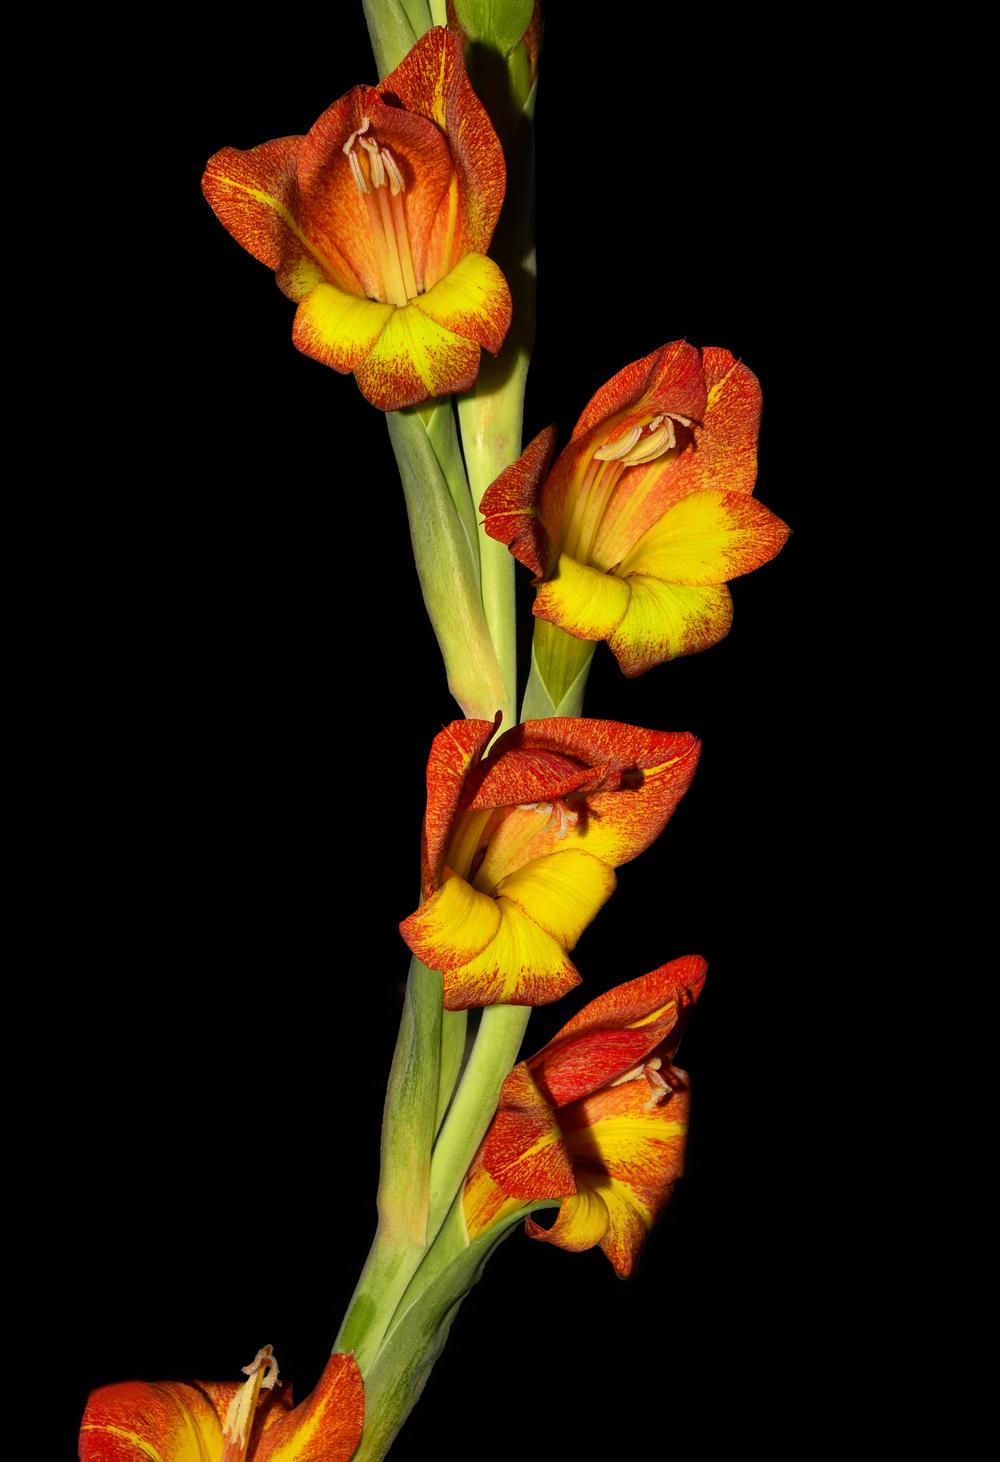 Photo of Gladiola (Gladiolus) uploaded by dawiz1753